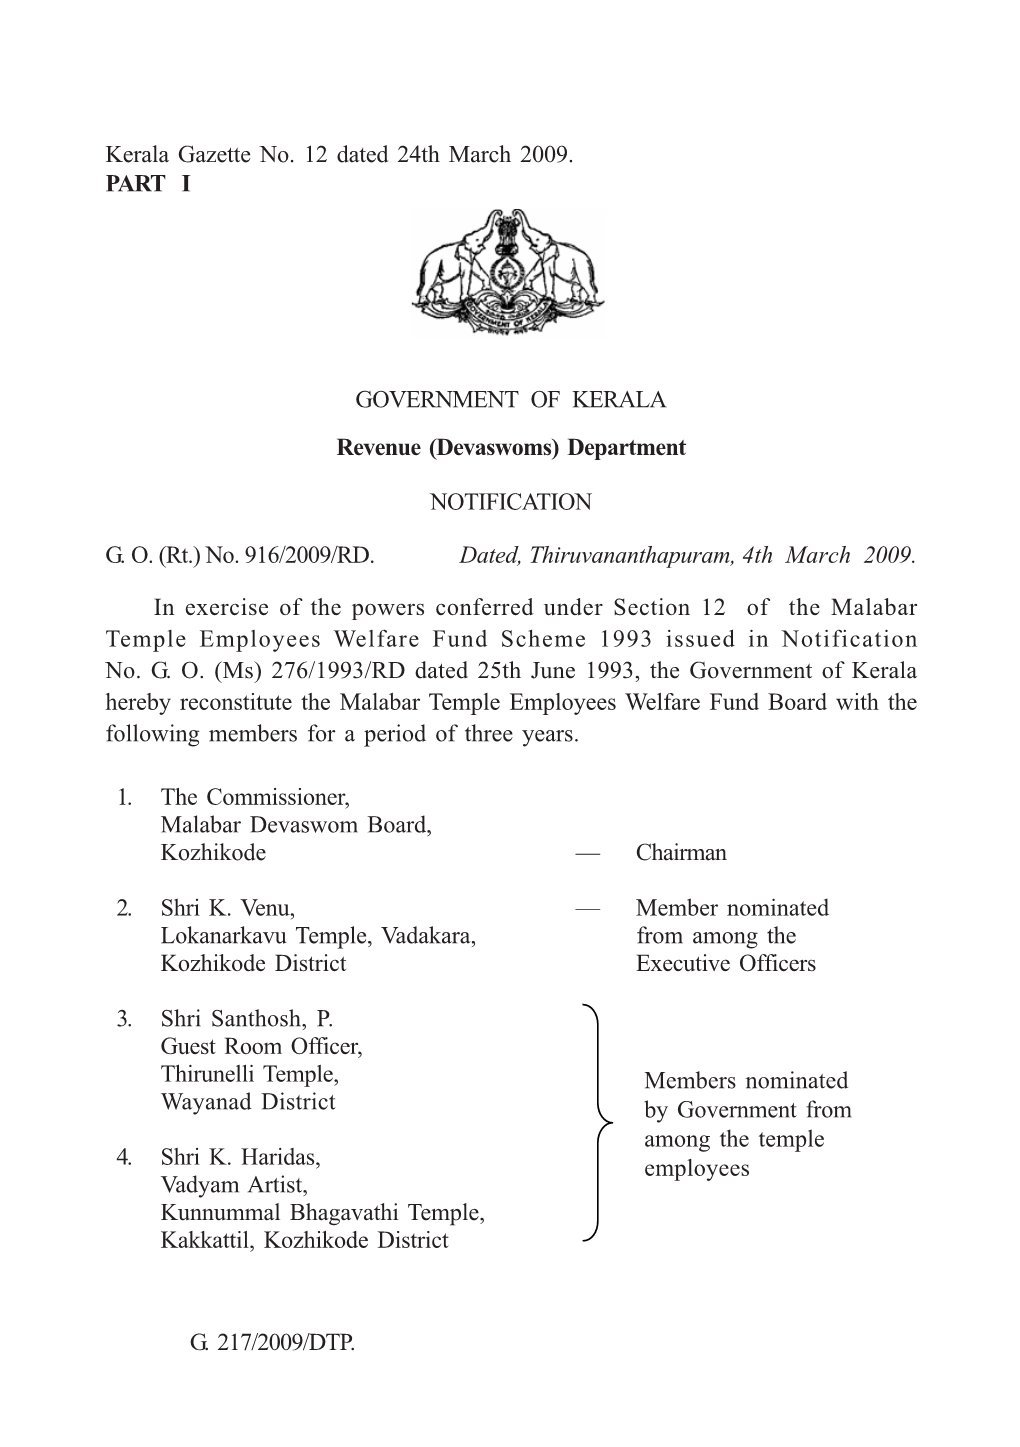 GOVERNMENT of KERALA Revenue (Devaswoms) Department